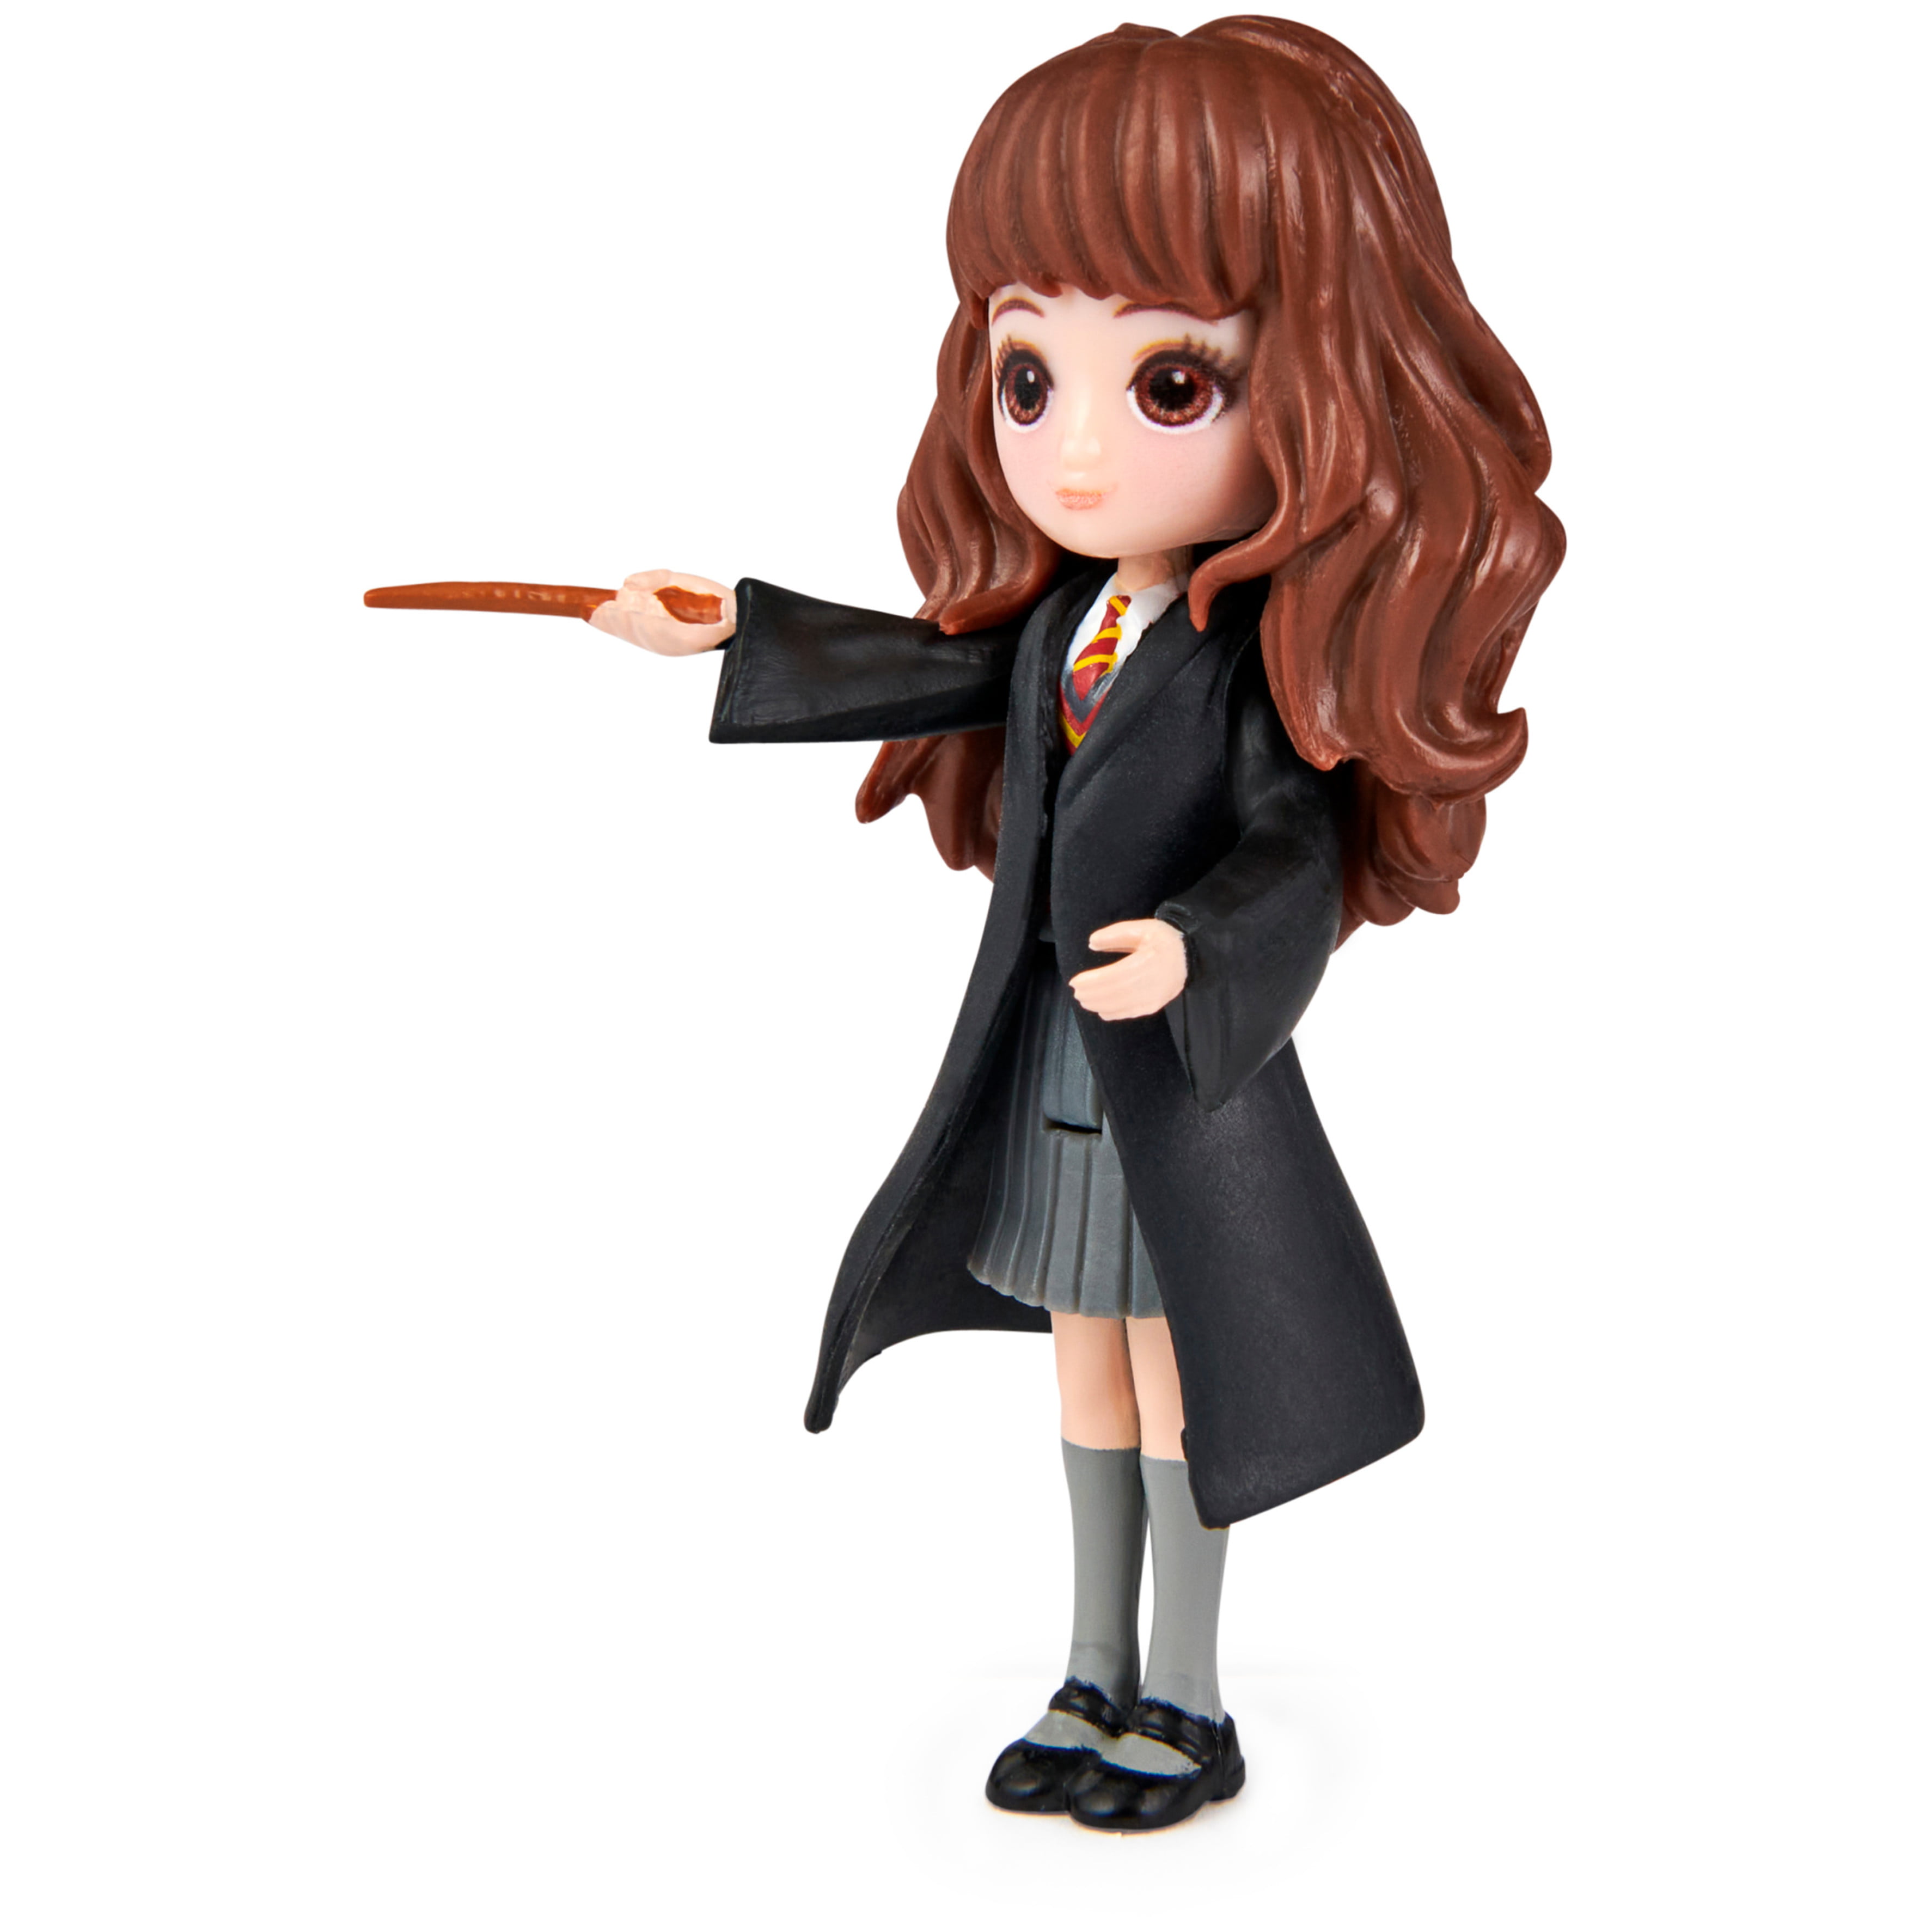 Korean TV Anime Girl Mini Candy Shop Store Miniature Pretend Play Toy for Kids 